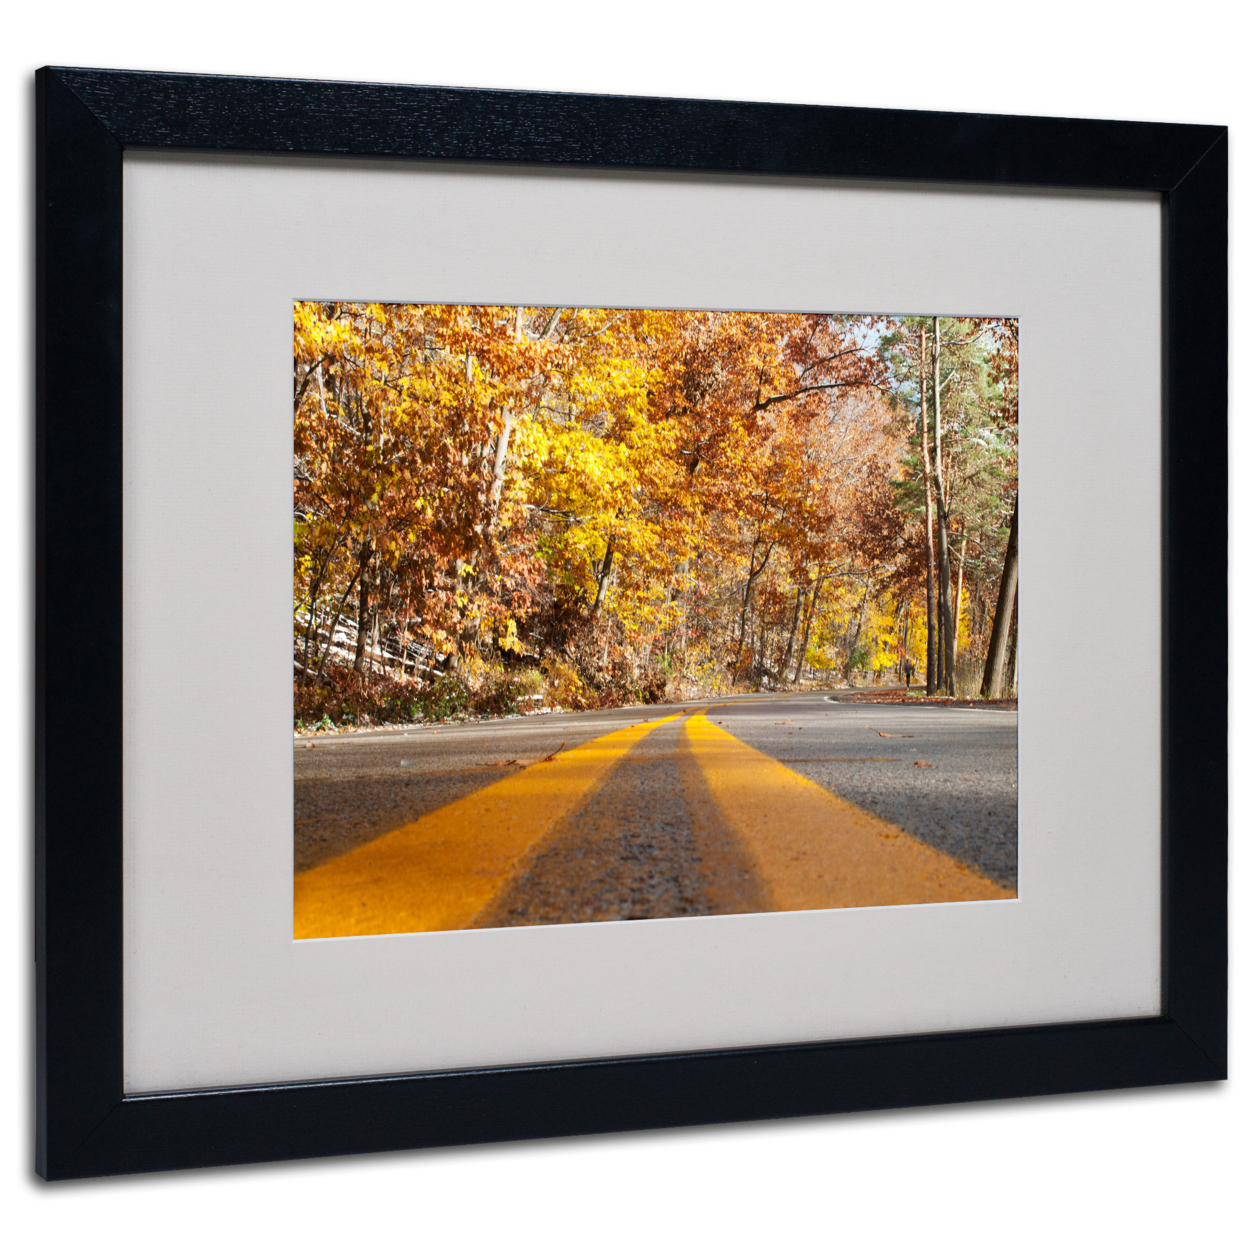 Kurt Shaffer 'Autumn Road' Black Wooden Framed Art 18 X 22 Inches